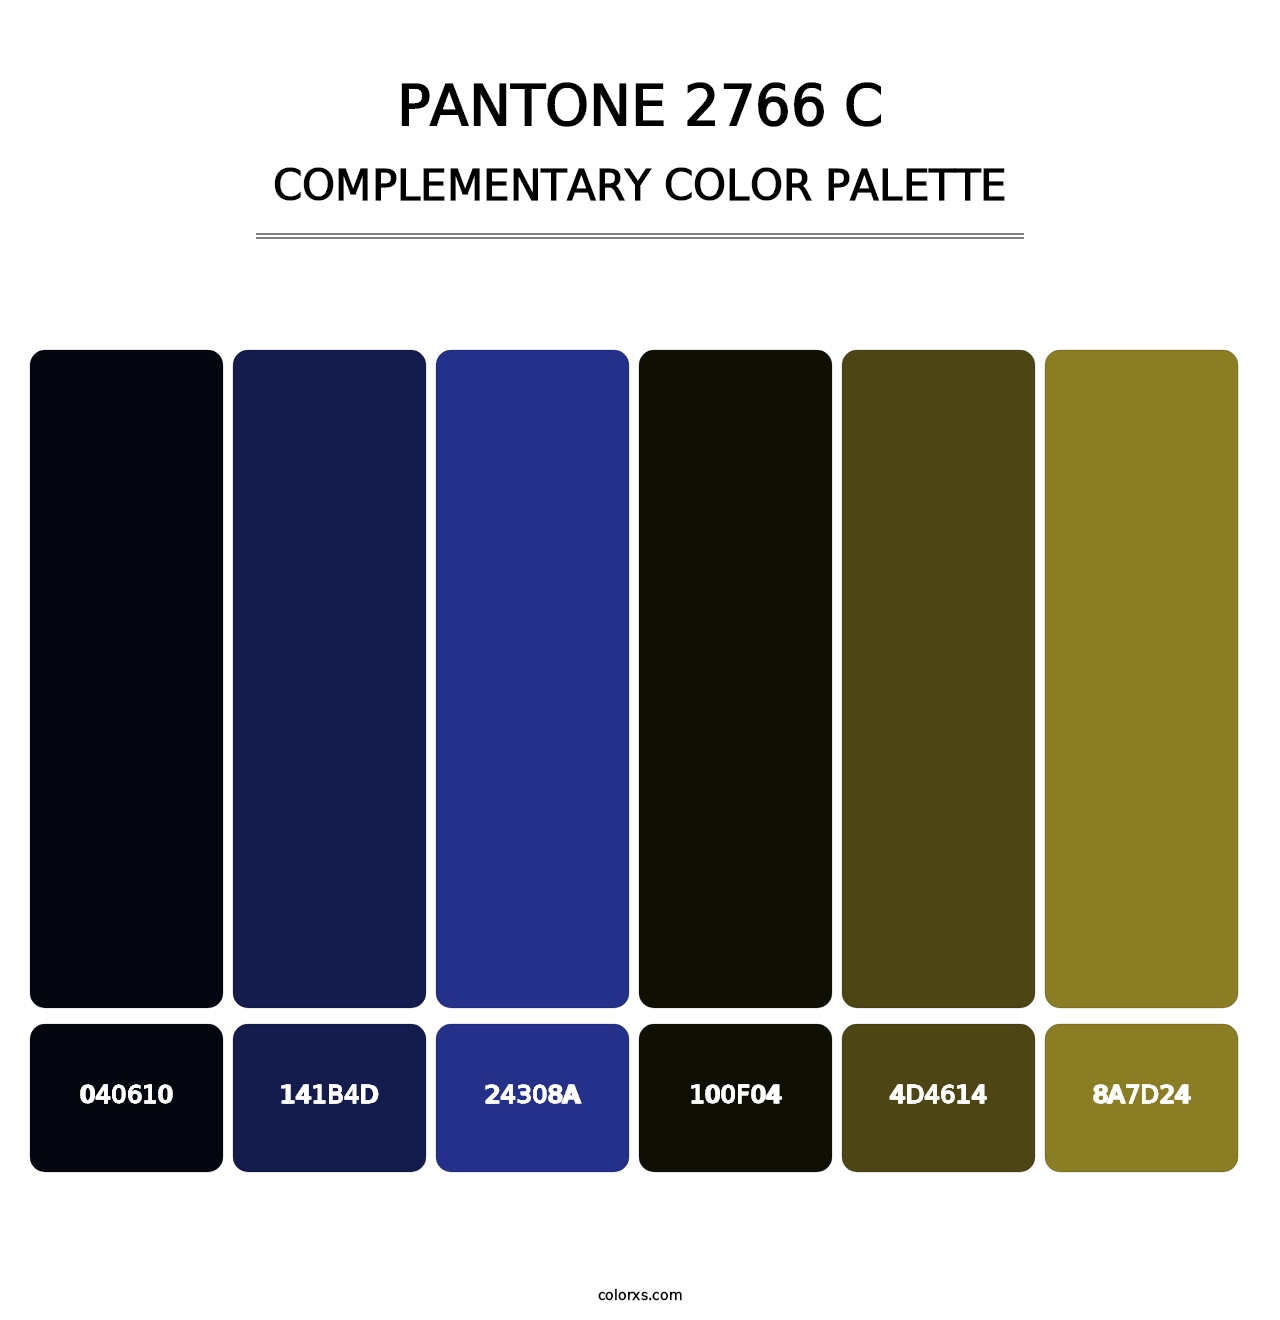 PANTONE 2766 C - Complementary Color Palette